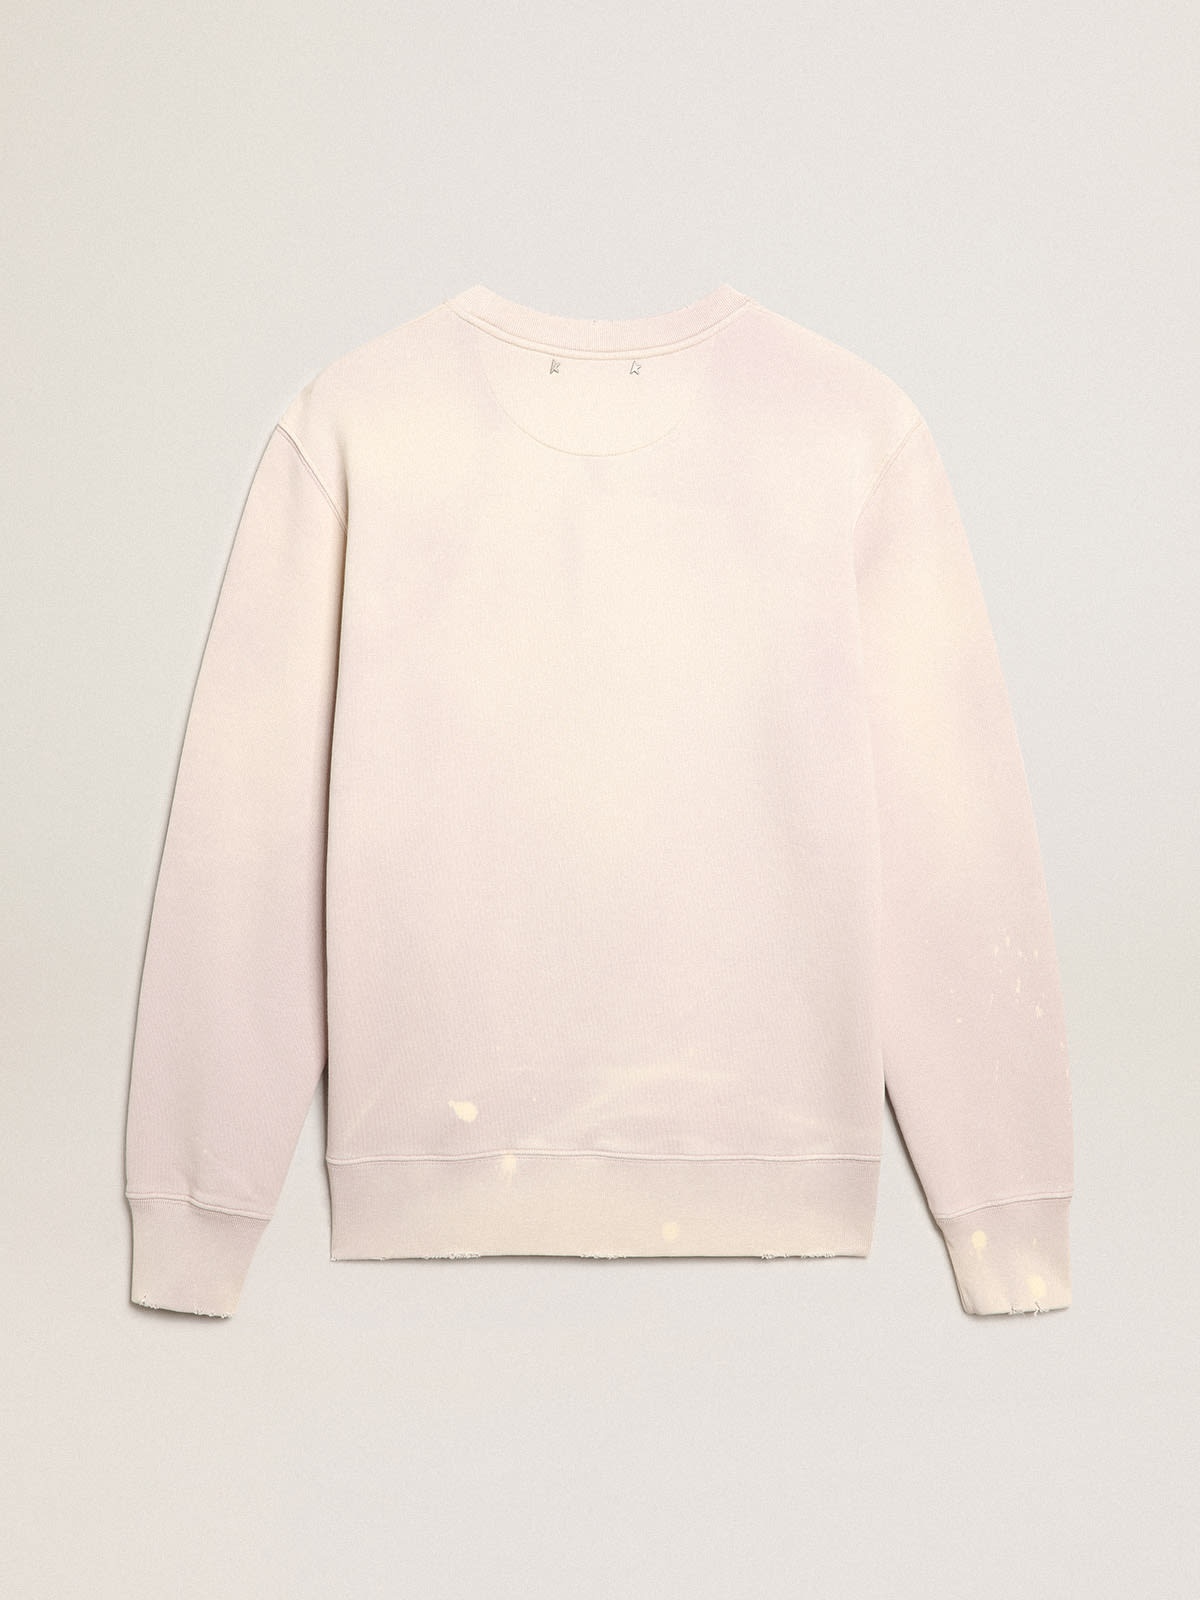 Distressed-finish pale pink sweatshirt - 5